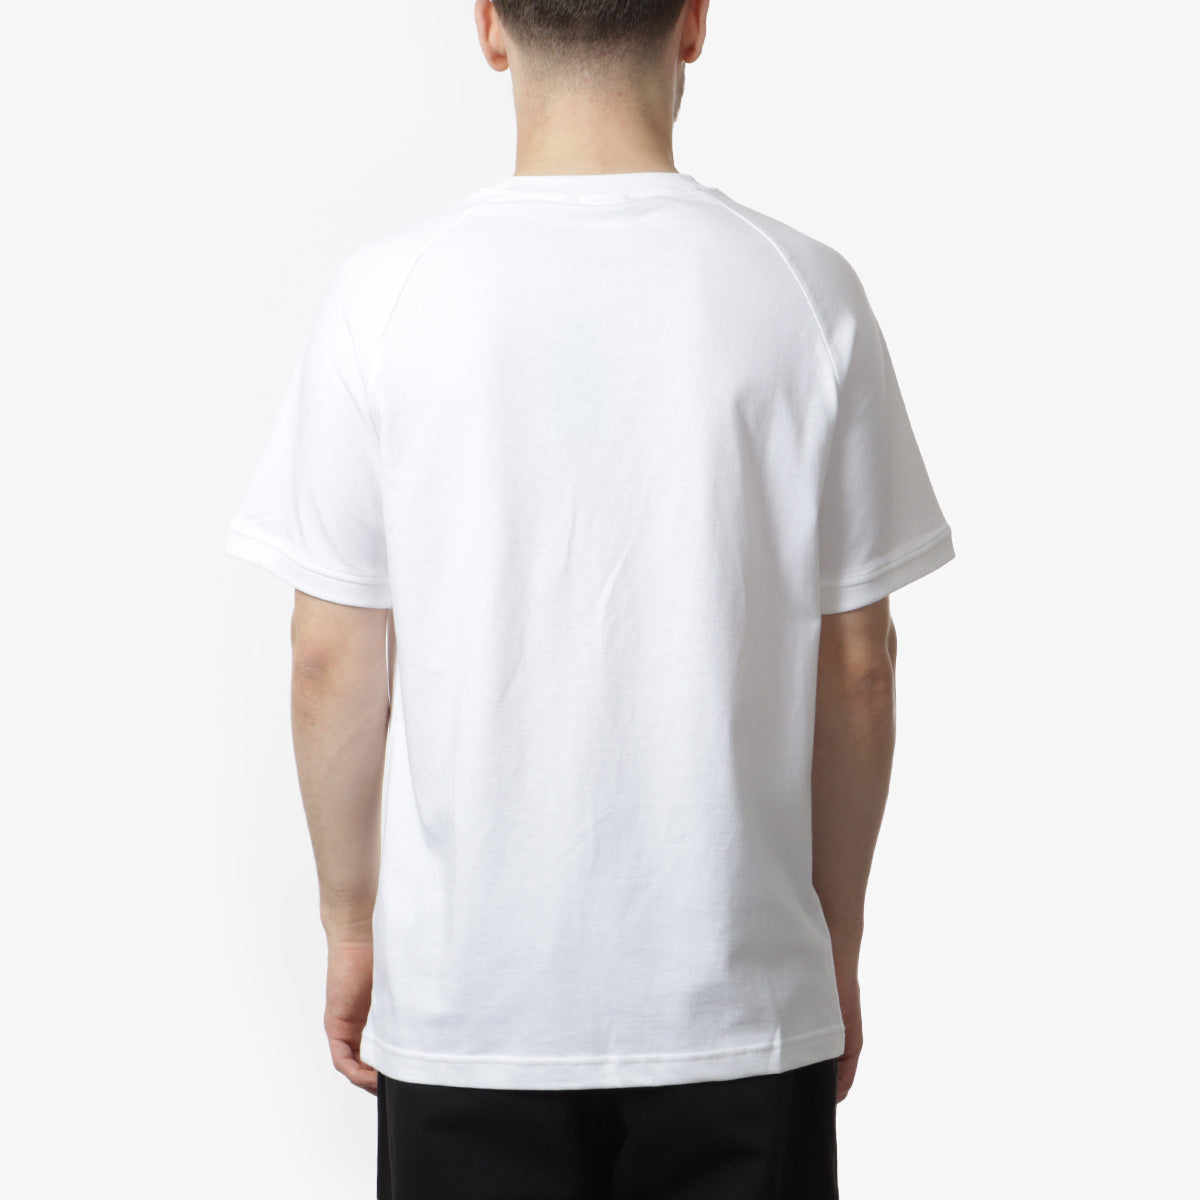 Adidas Originals GRF T-Shirt, White, Detail Shot 4